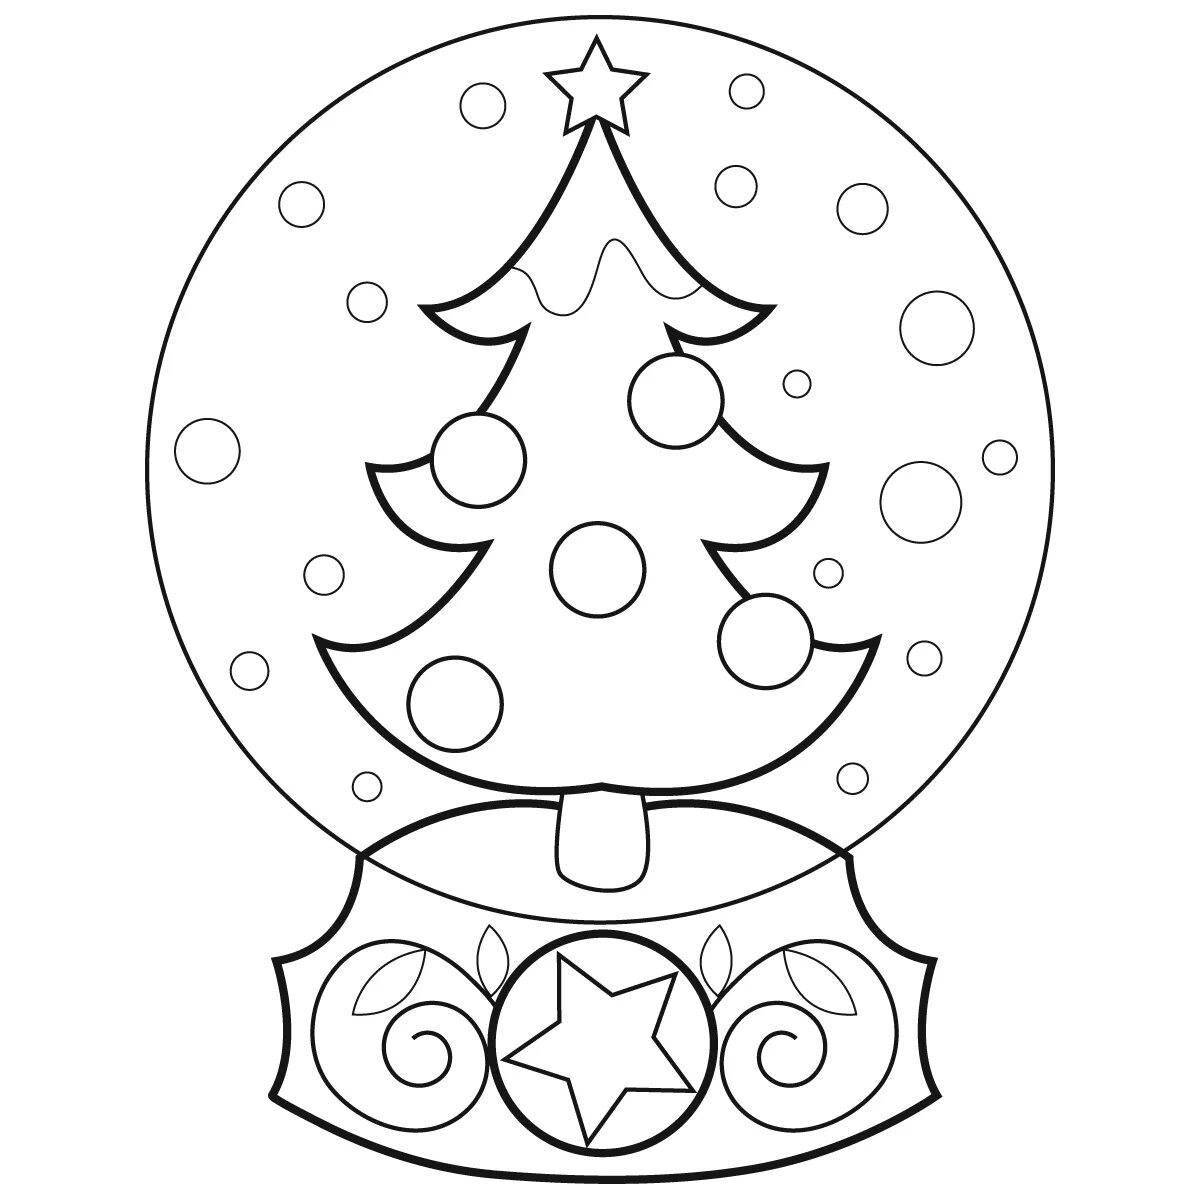 Decorative Christmas tree with balls